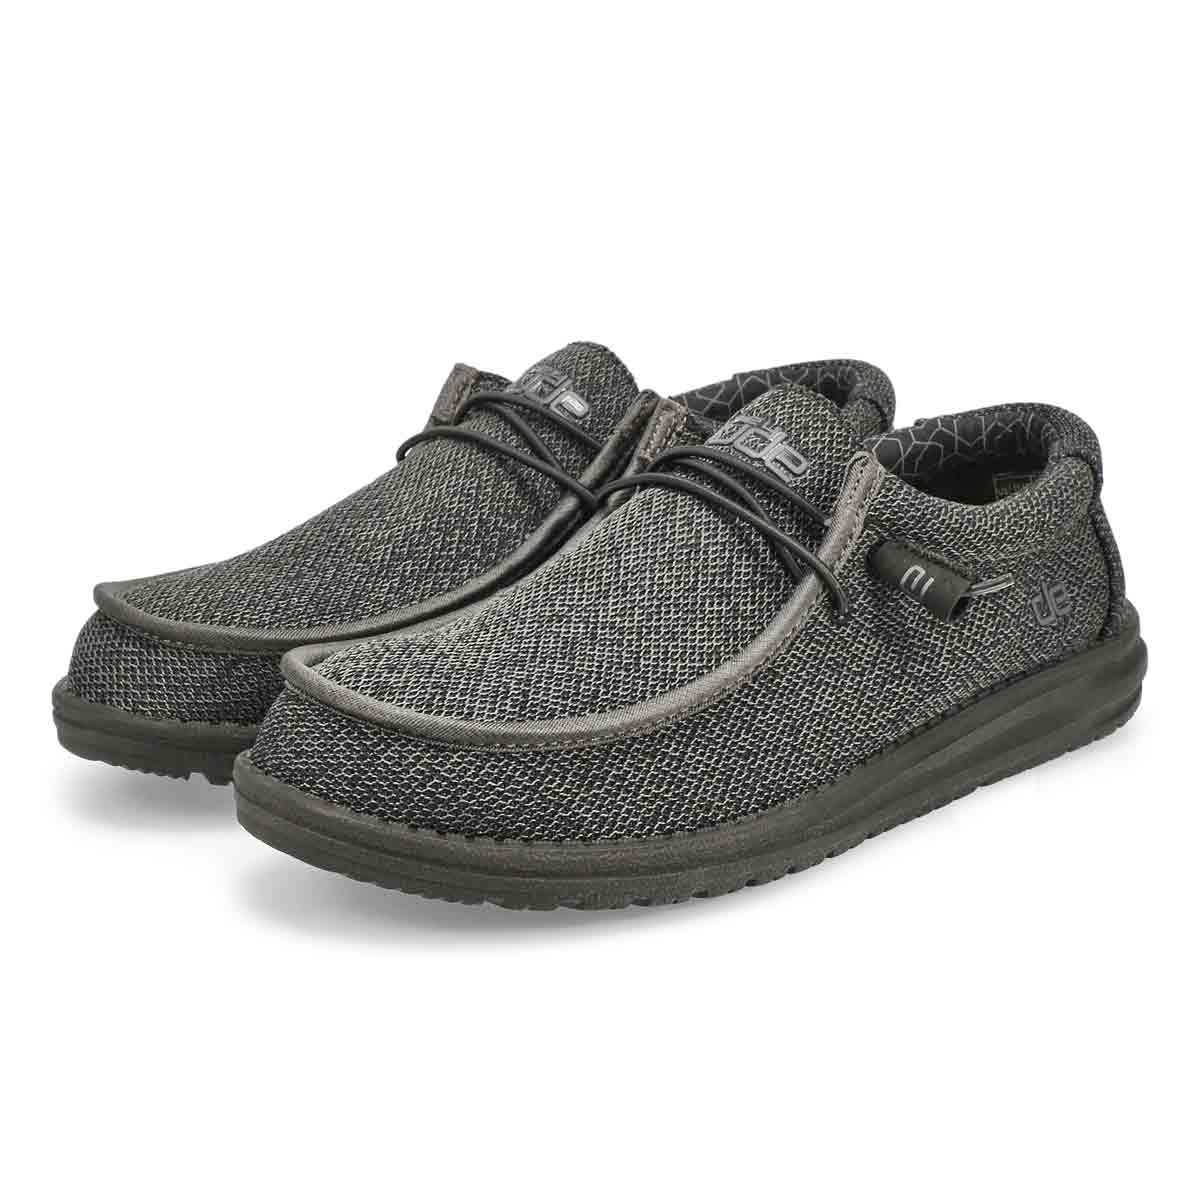 Men's Wally Sox Micro Casual Shoe - Black